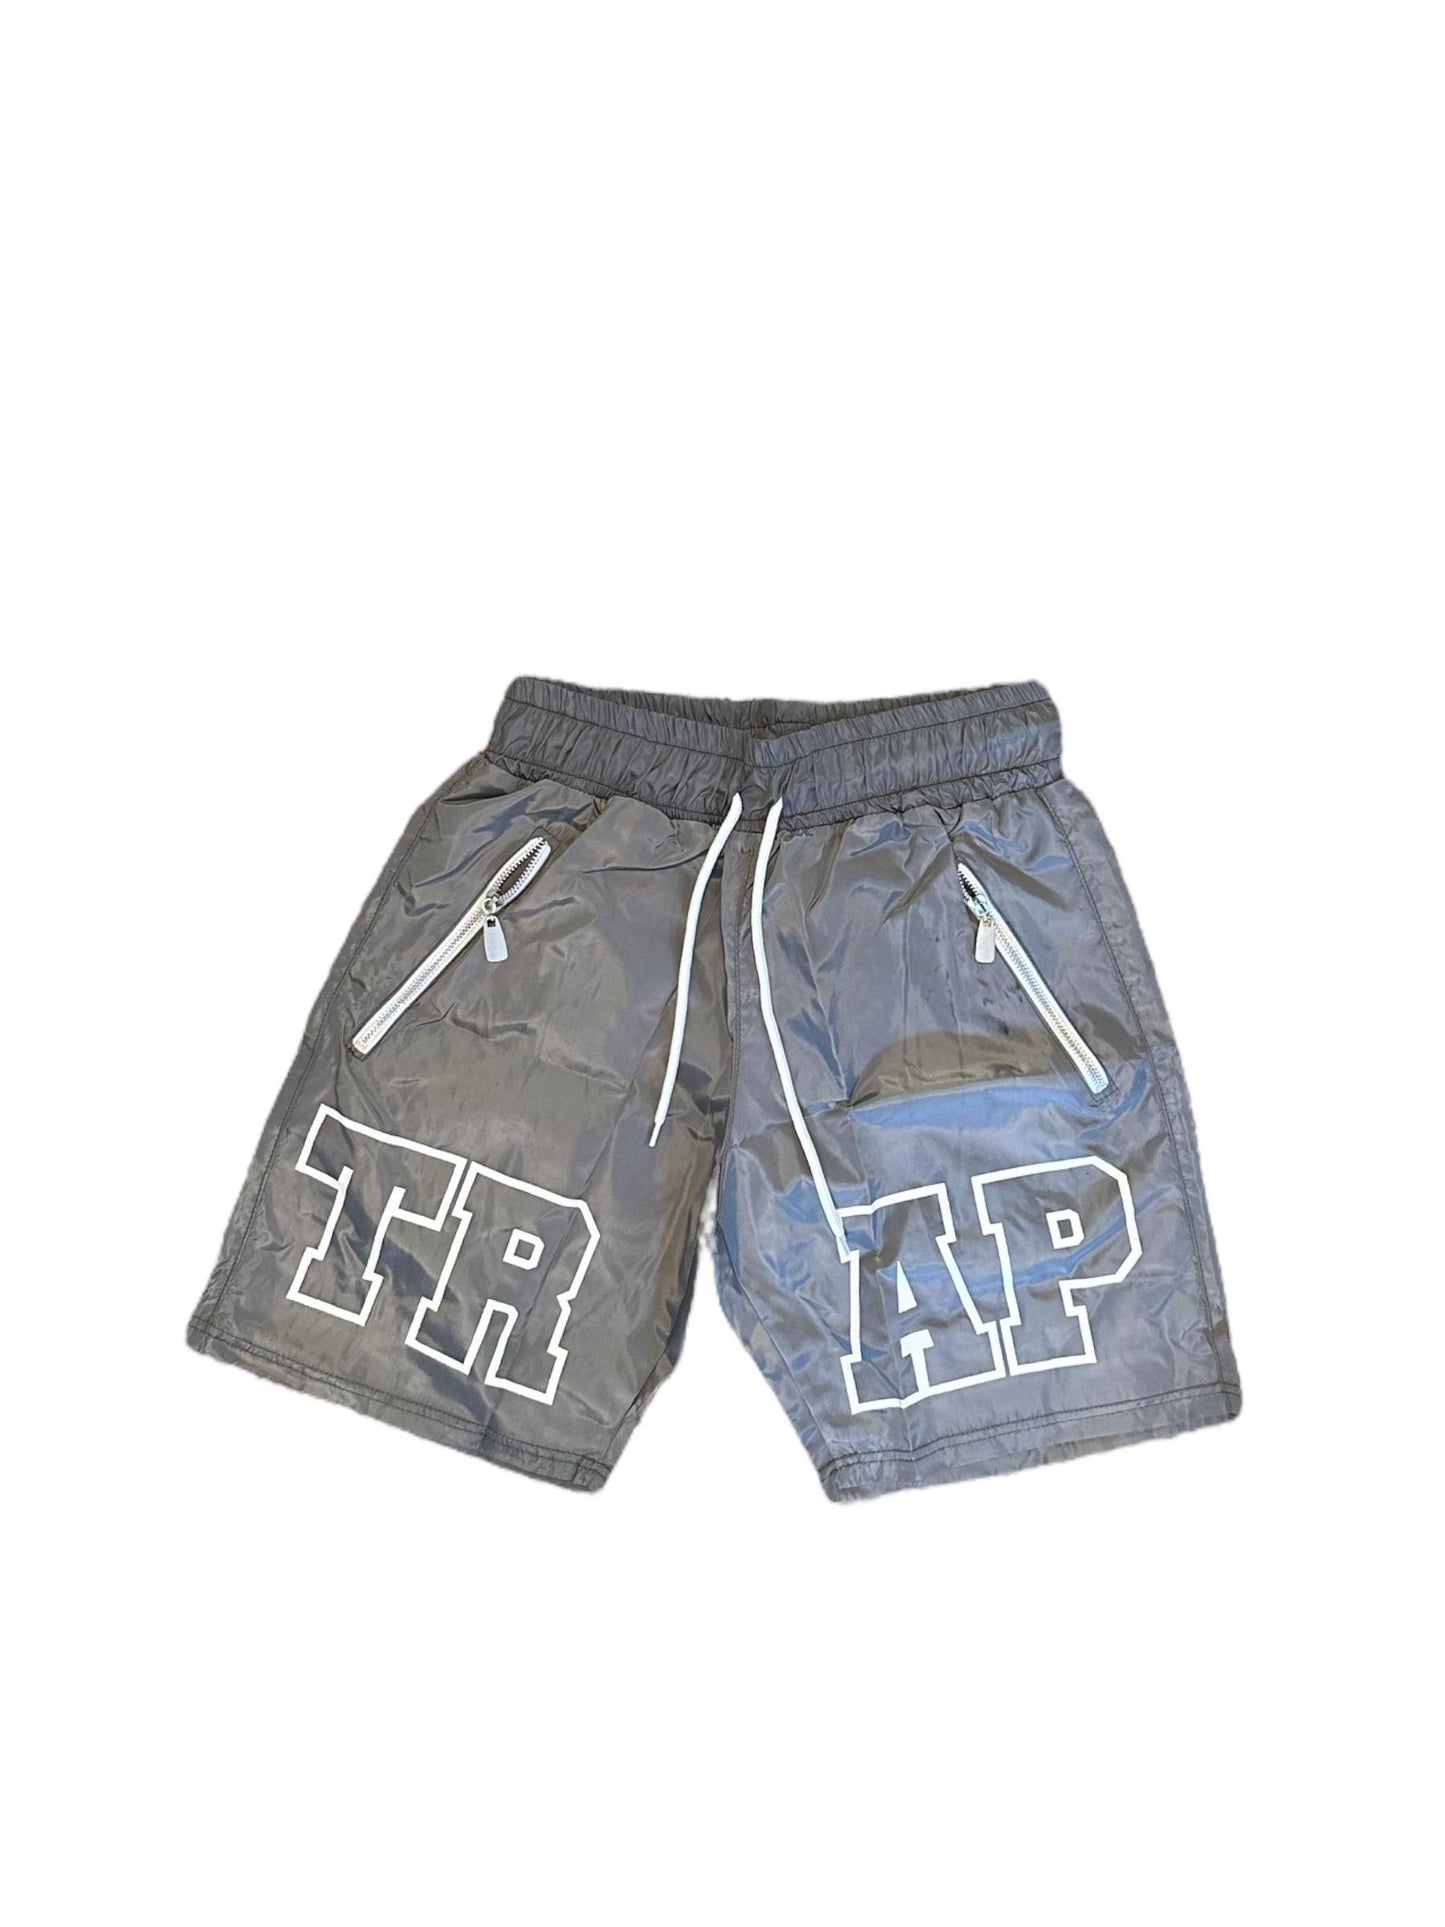 Grey Trap Shorts